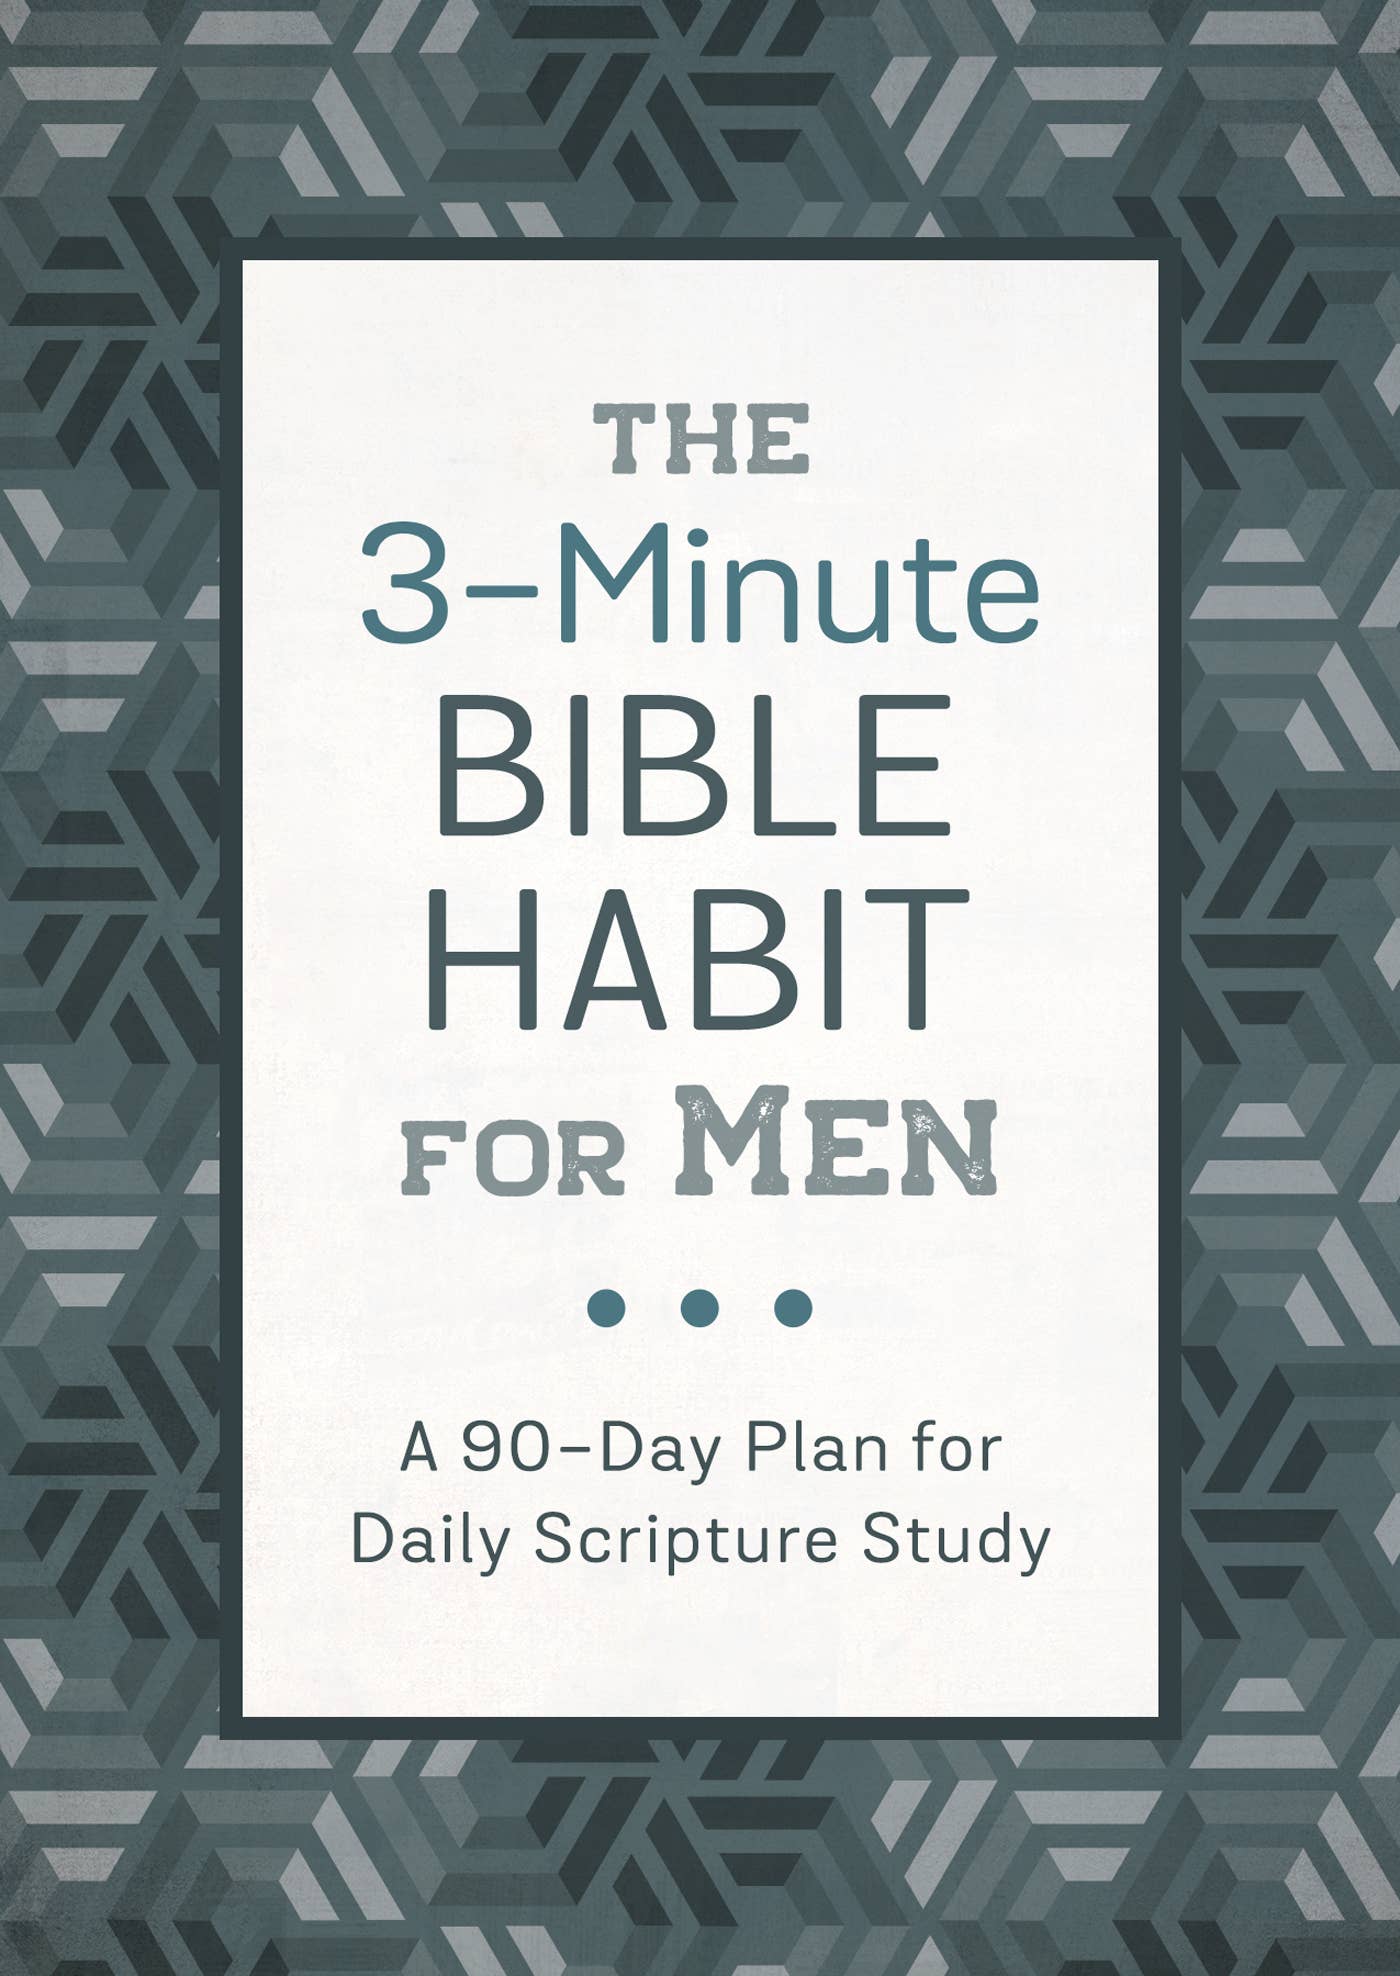 The 3-Minute Bible Habit for Men